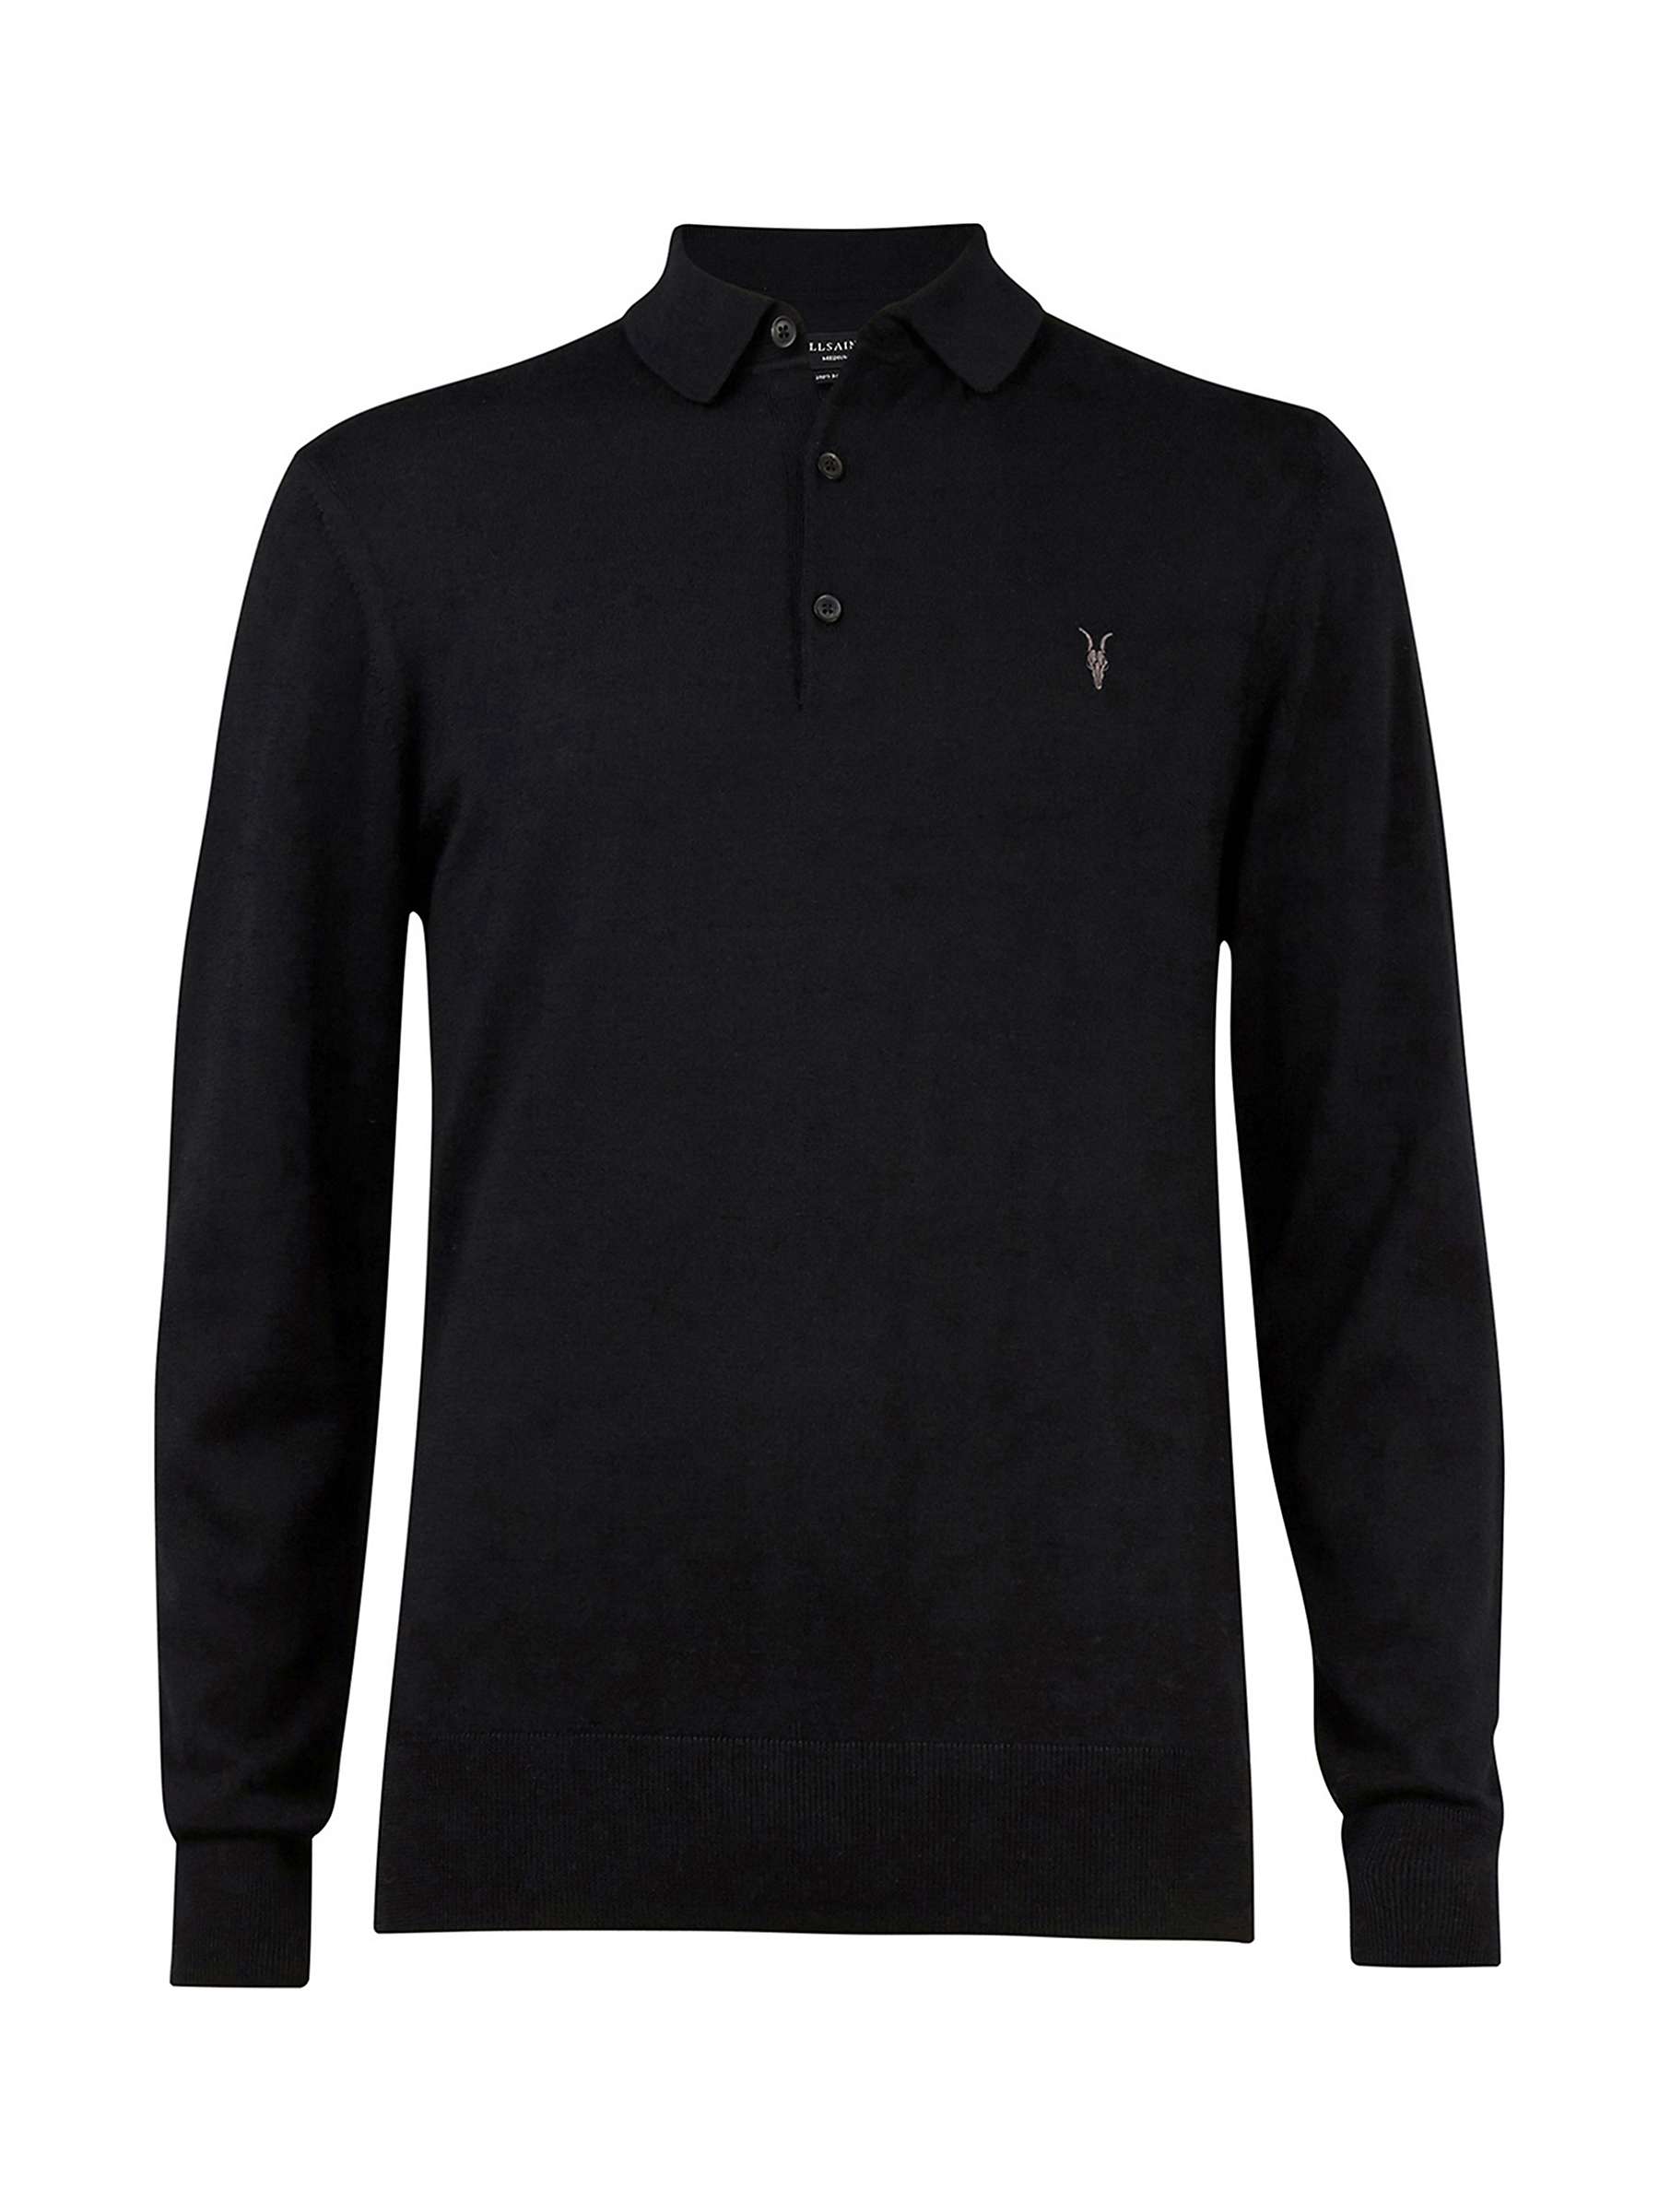 AllSaints Mode Merino Slim Fit Polo Shirt, Black at John Lewis & Partners